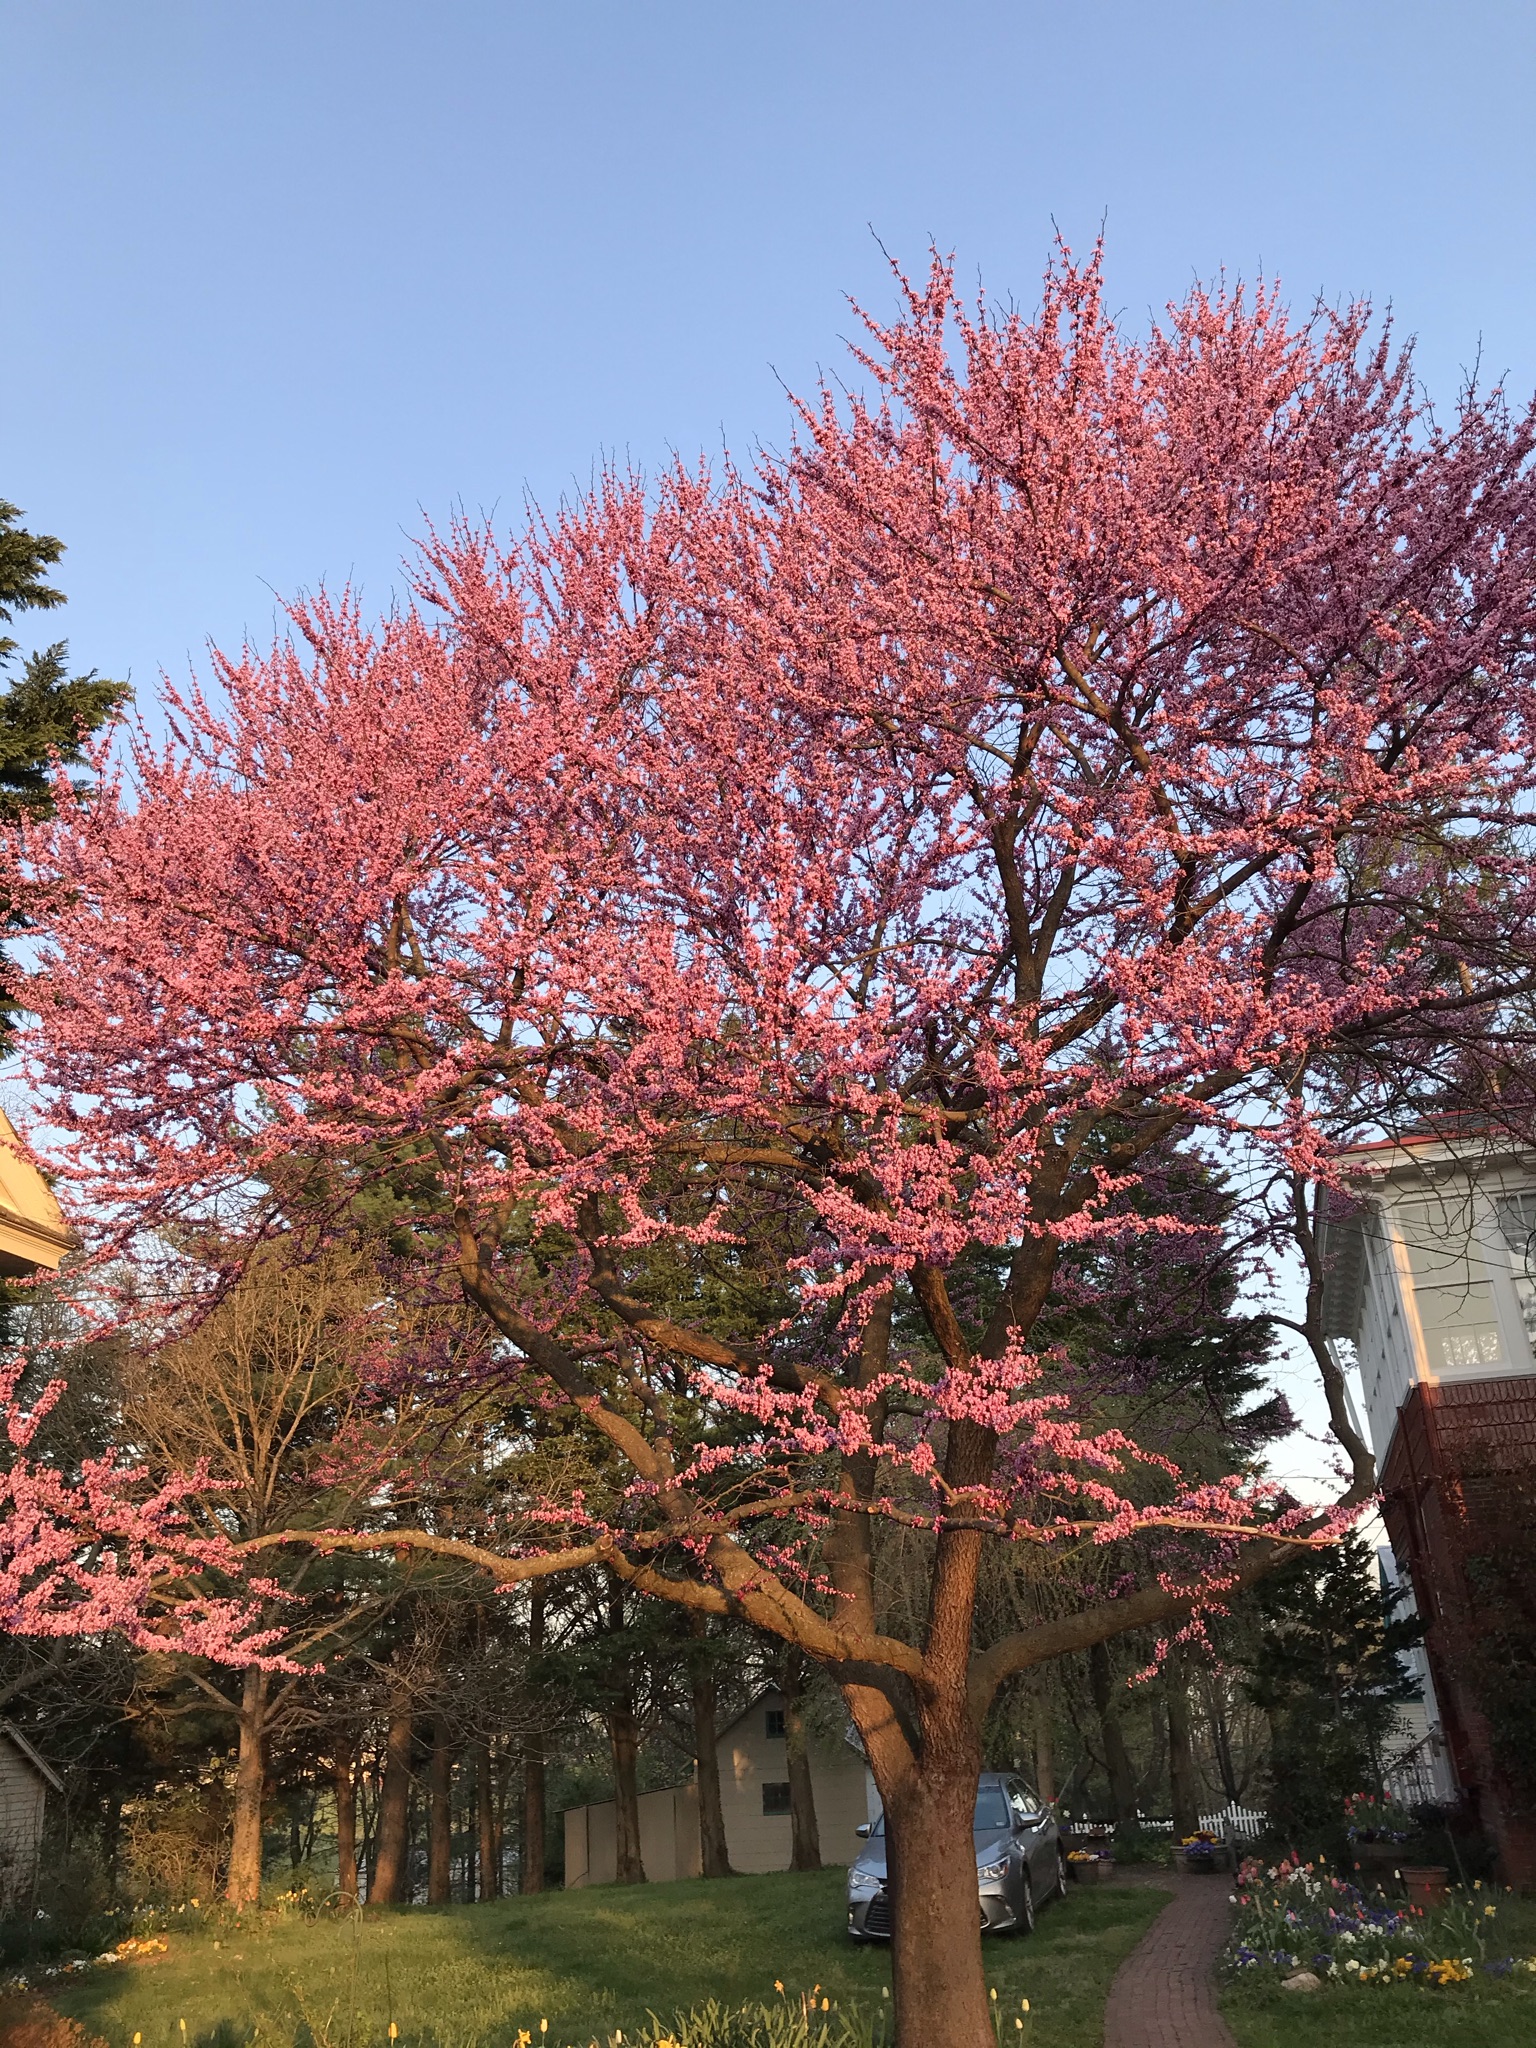 Redbud tree in bloom in early spring